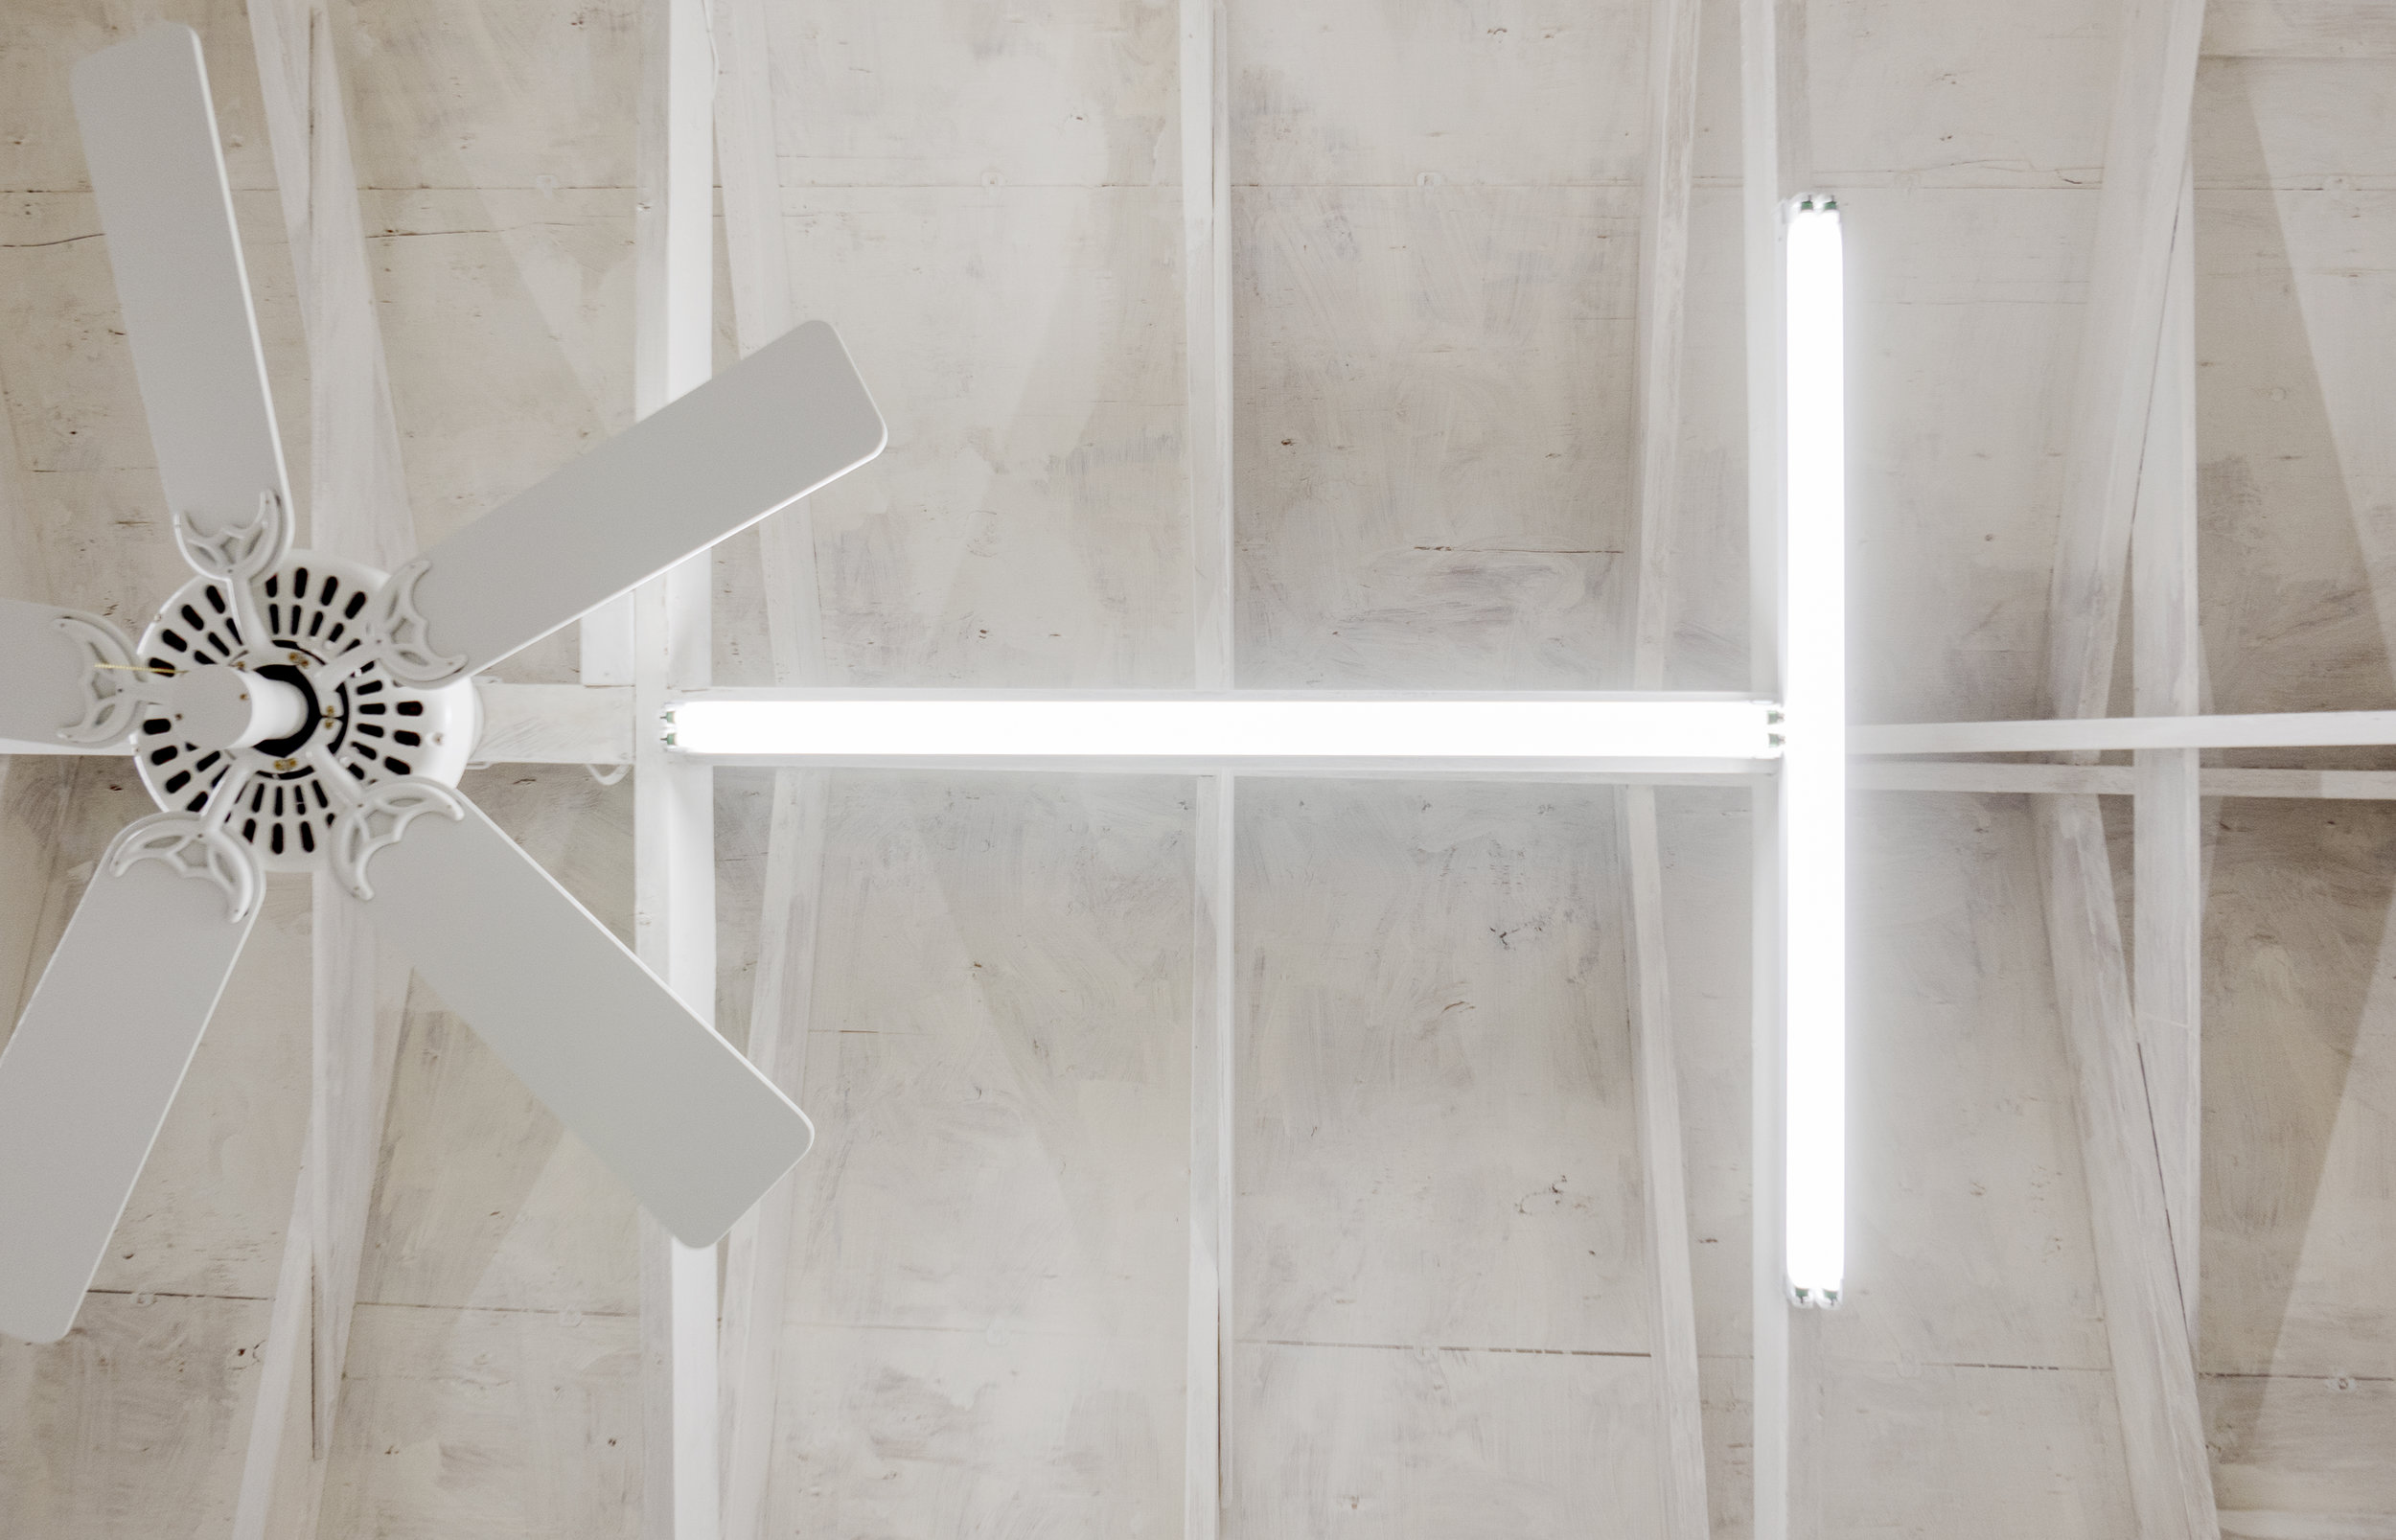     Haynes Riley,  Perpendicular lines,  2019, fluorescent gallery lights, 3 × 3 × 46 in each 